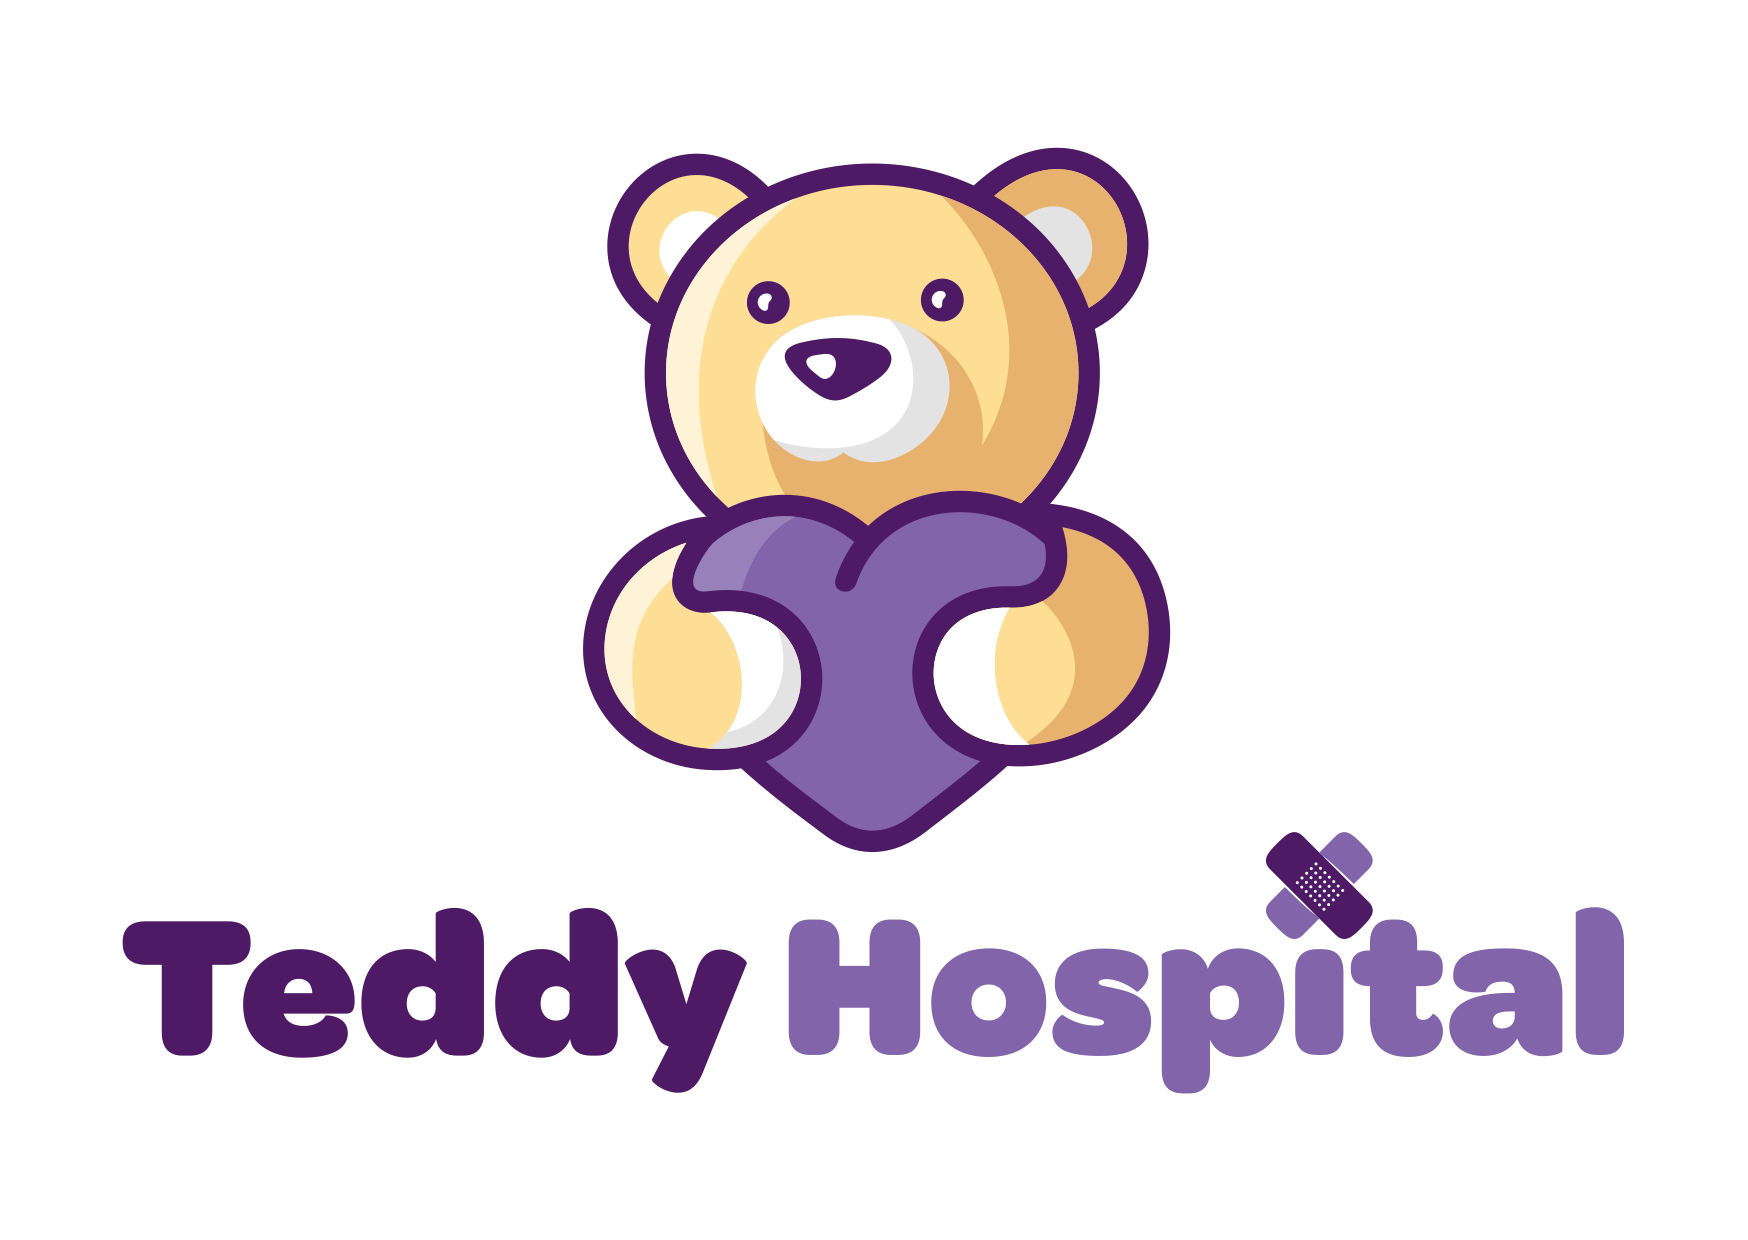 Teddy Hospital marque